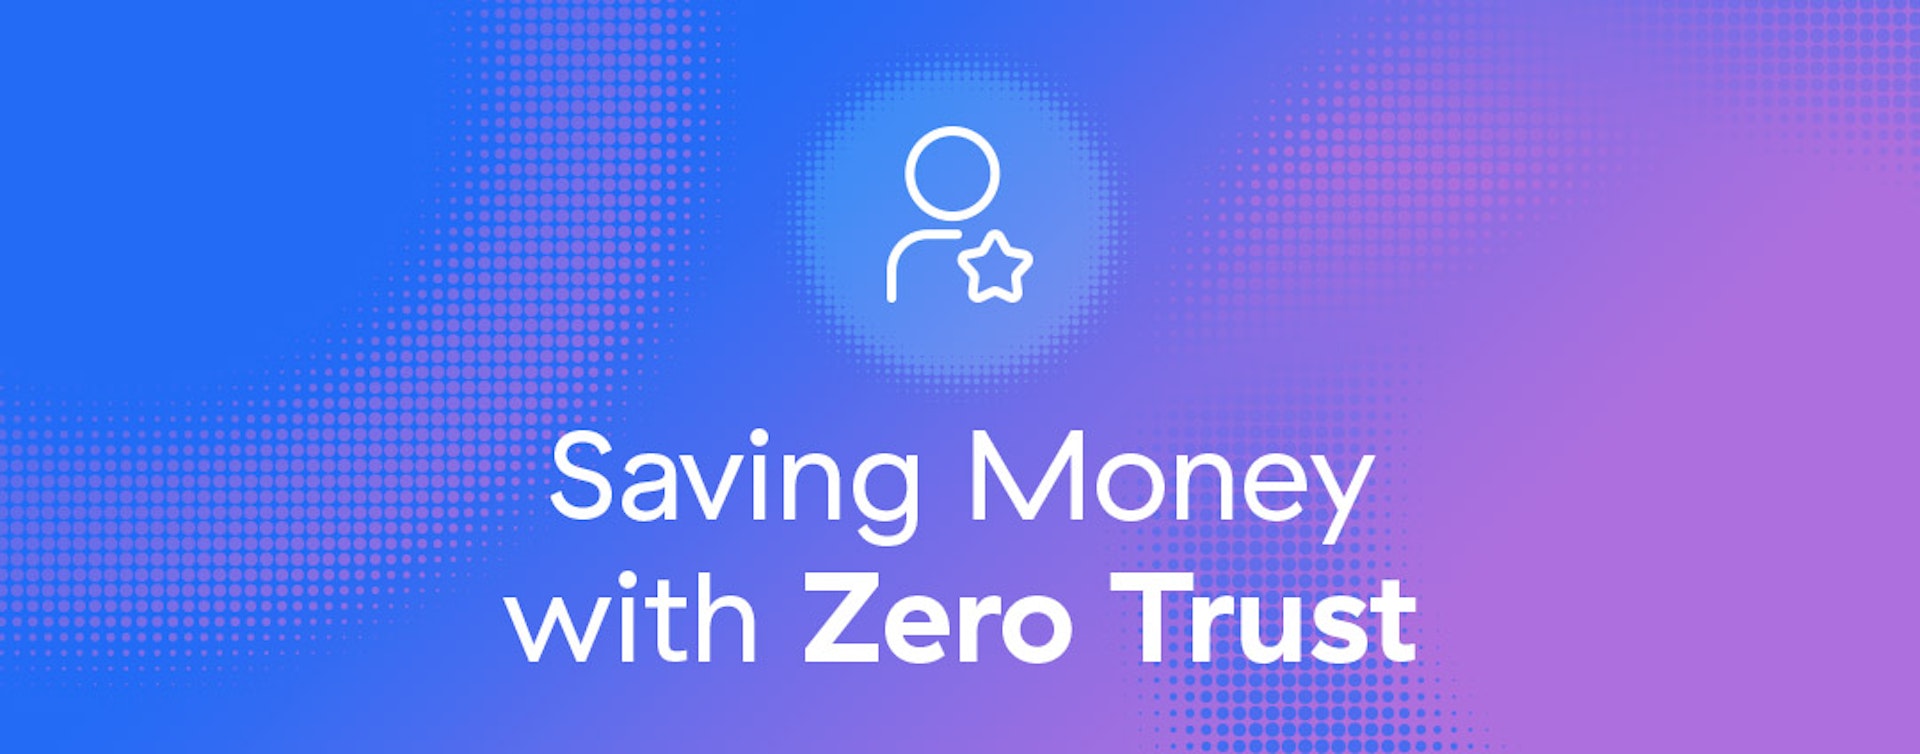 Saving Money with Zero Trust Part 5: Enhancing User Experiences